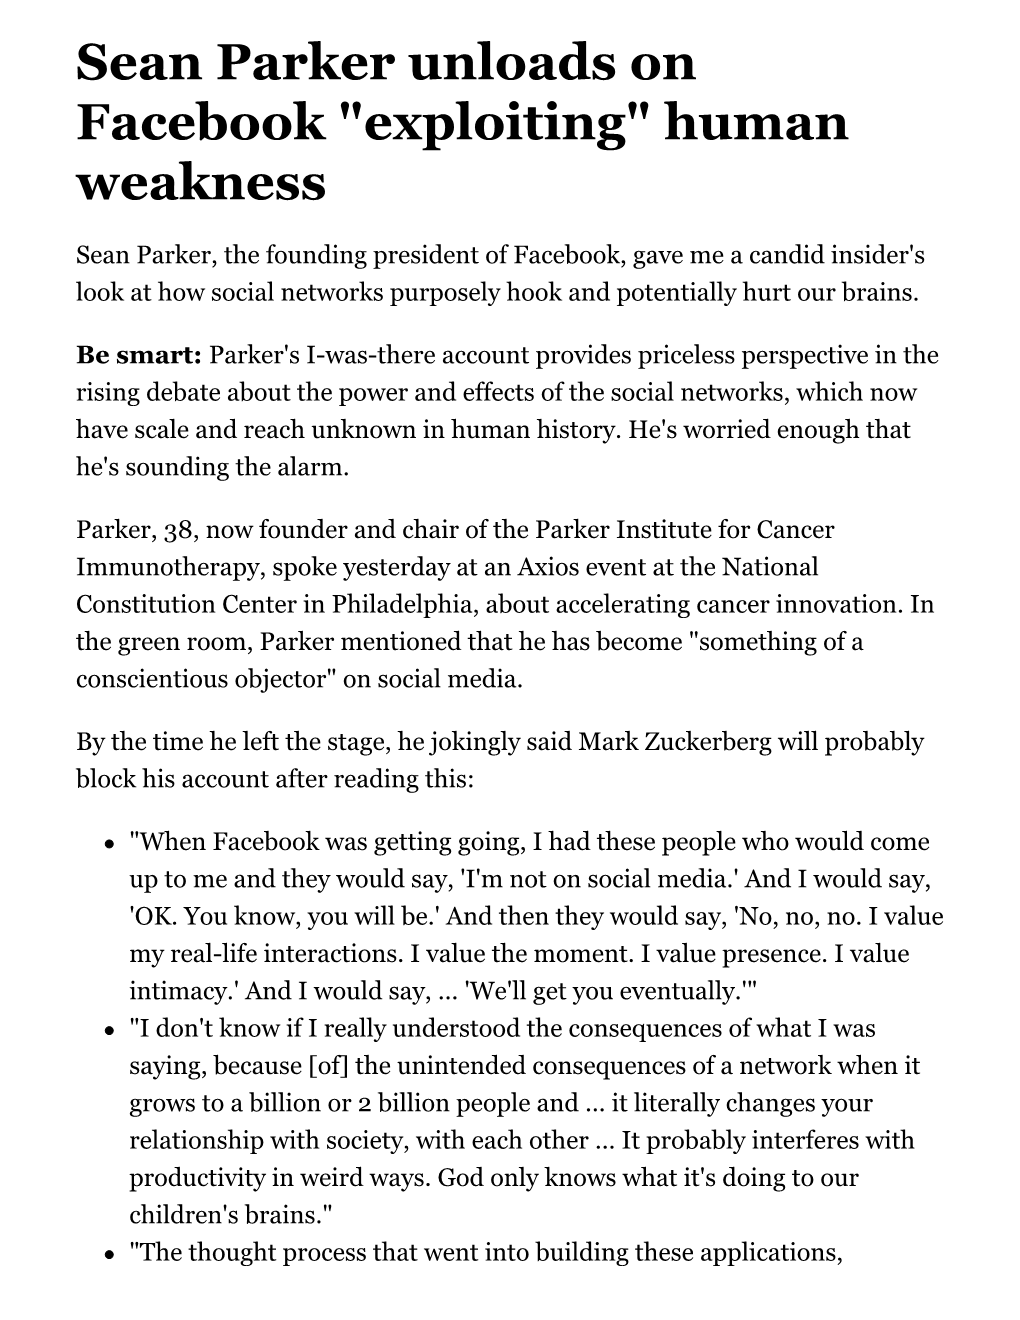 Sean Parker Unloads on Facebook "Exploiting" Human Weakness